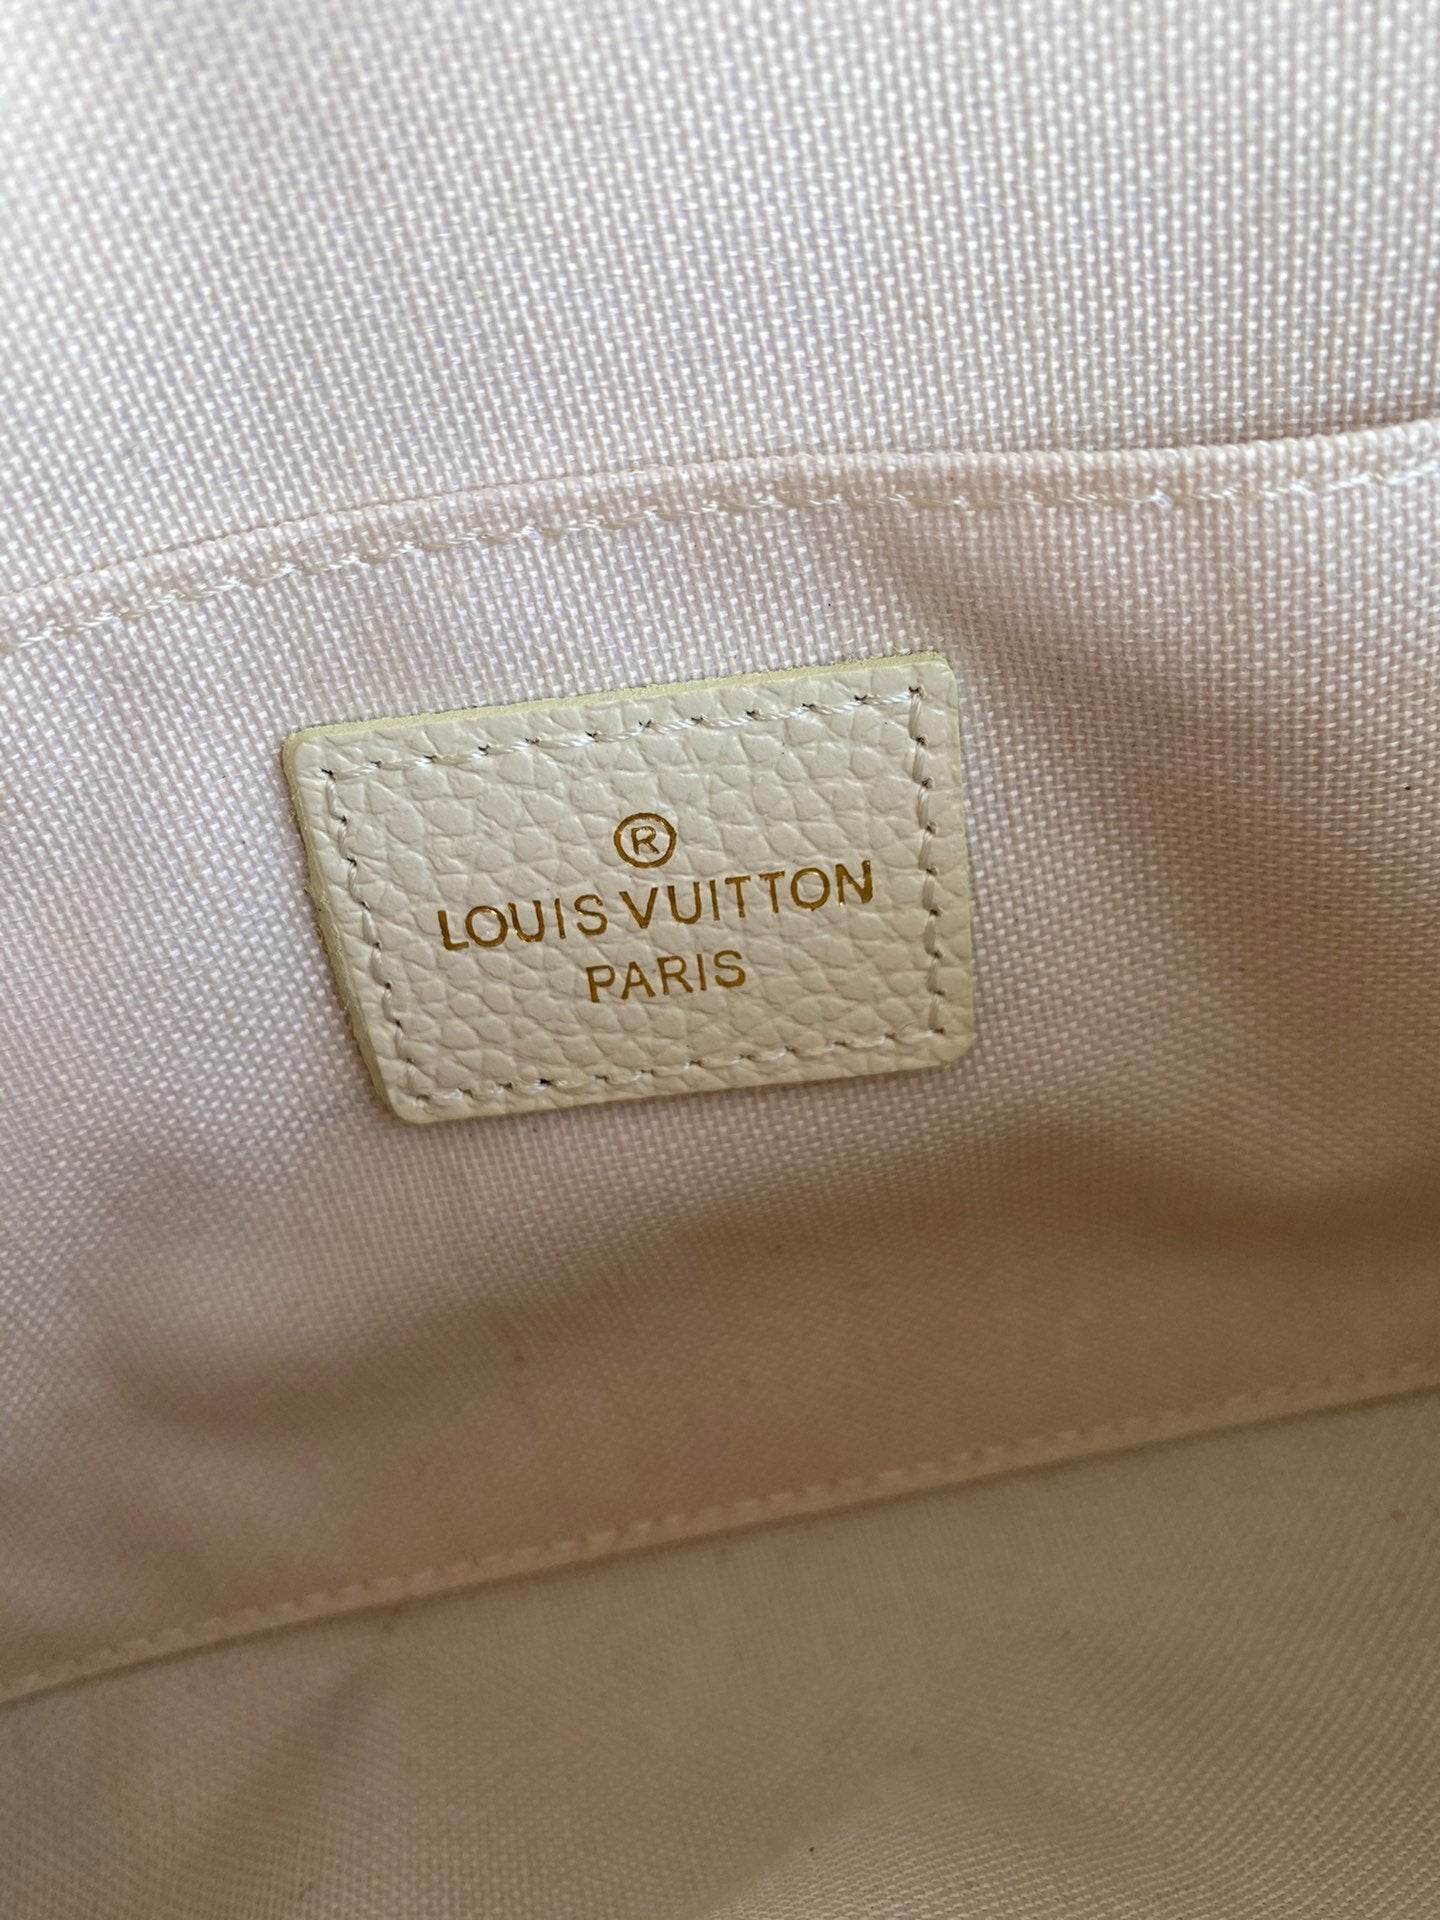 BL - High Quality Bags LUV 033